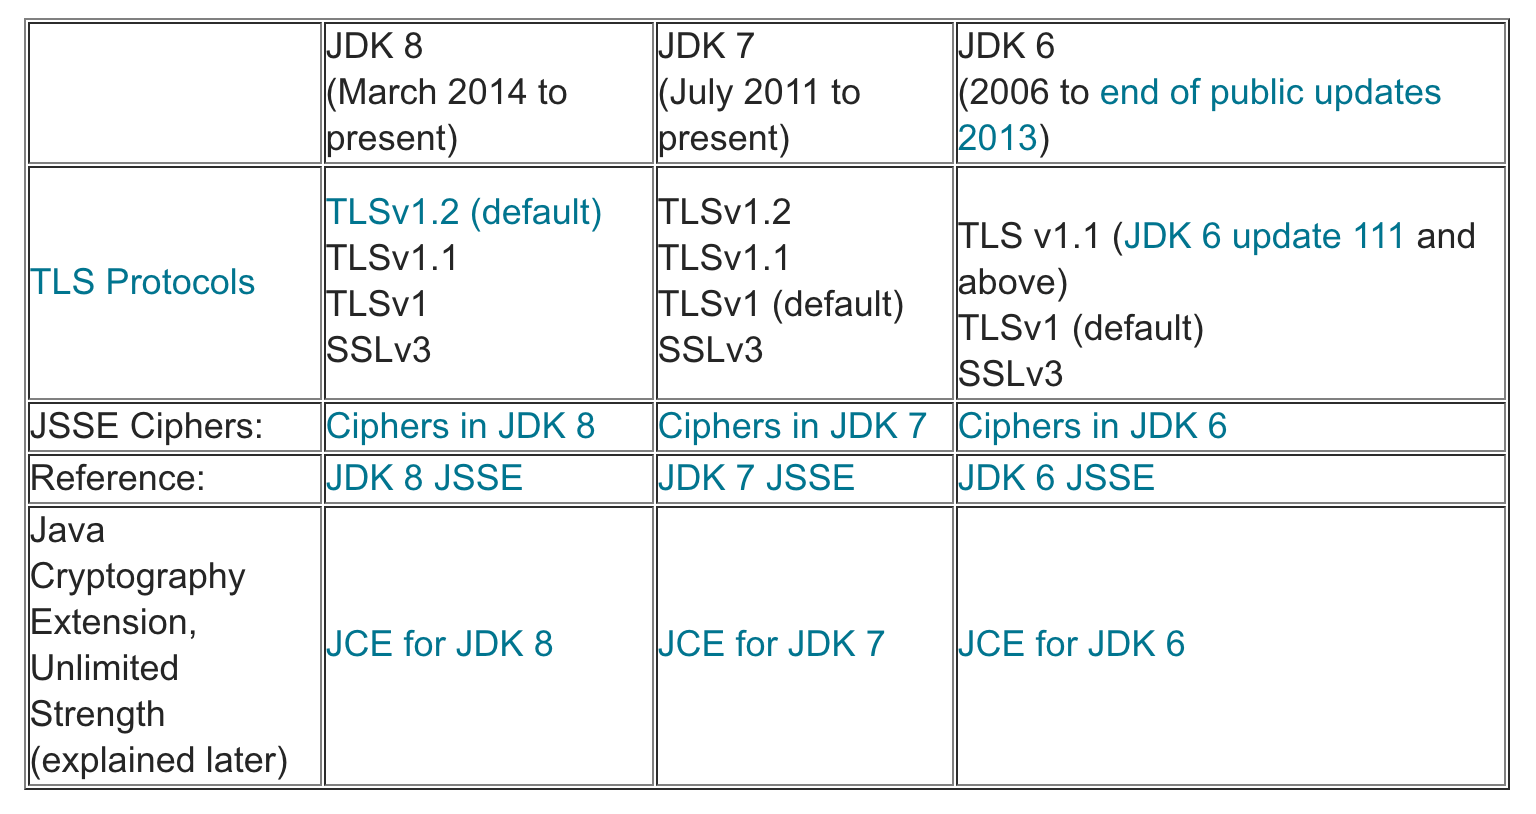 oracle的博客中对各个版本的JDK对TLS的说明